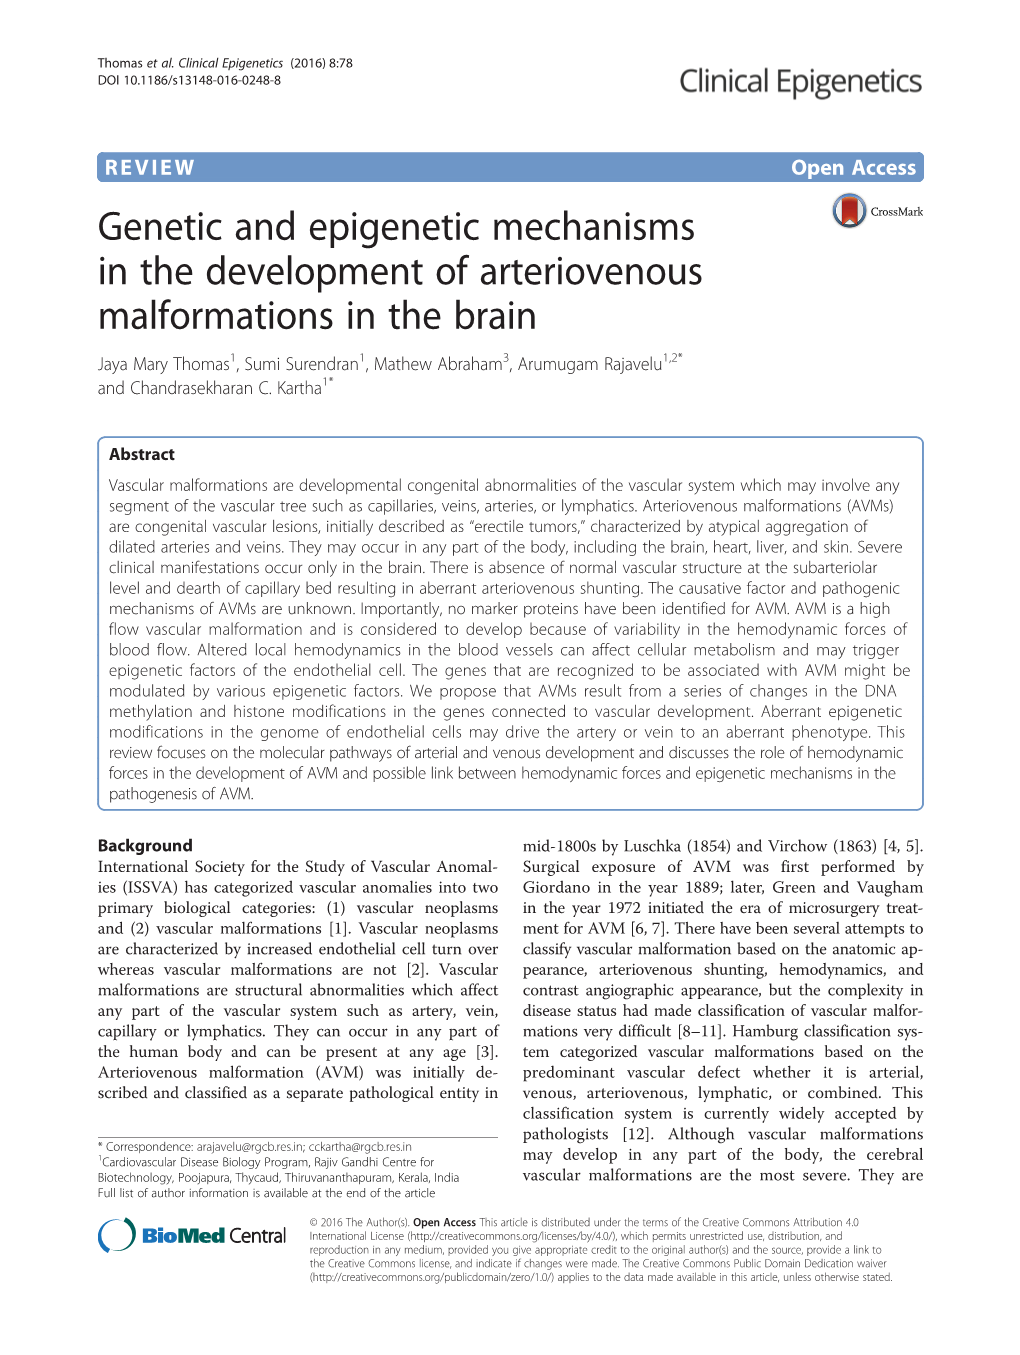 Genetic and Epigenetic Mechanisms in the Development